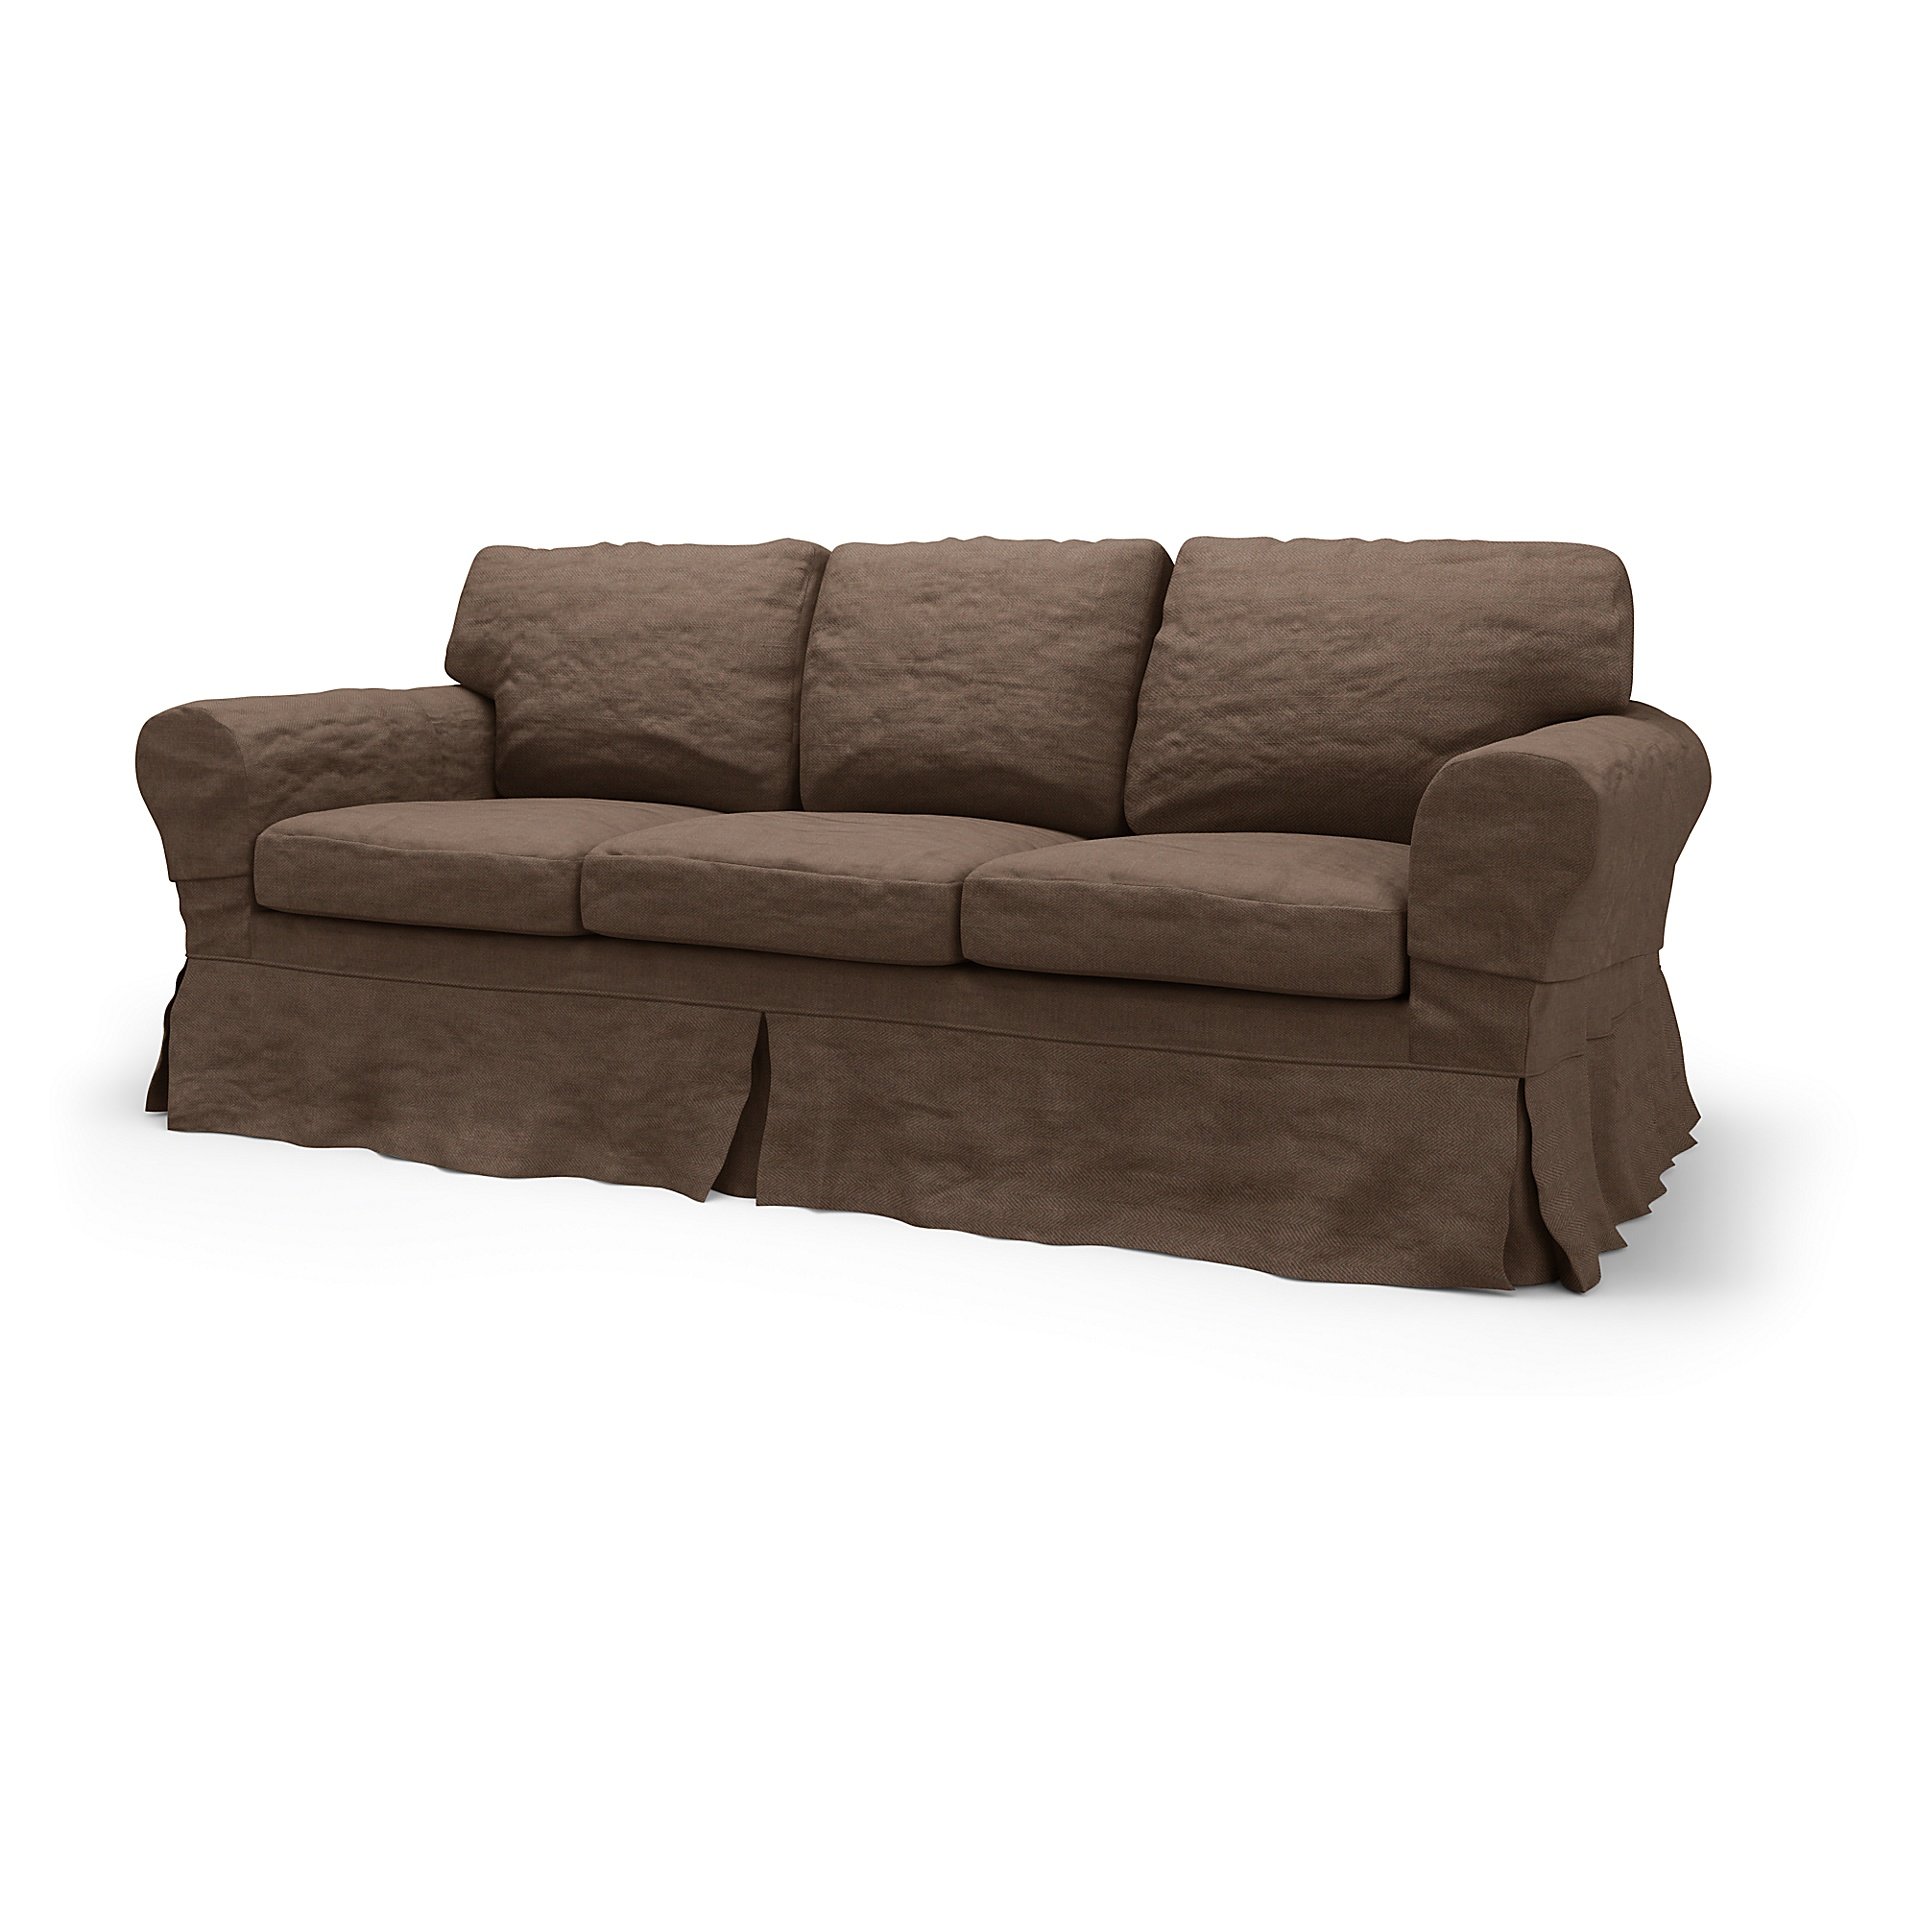 IKEA - Ektorp 3 Seater Sofa Bed Cover, Chocolate, Boucle & Texture - Bemz